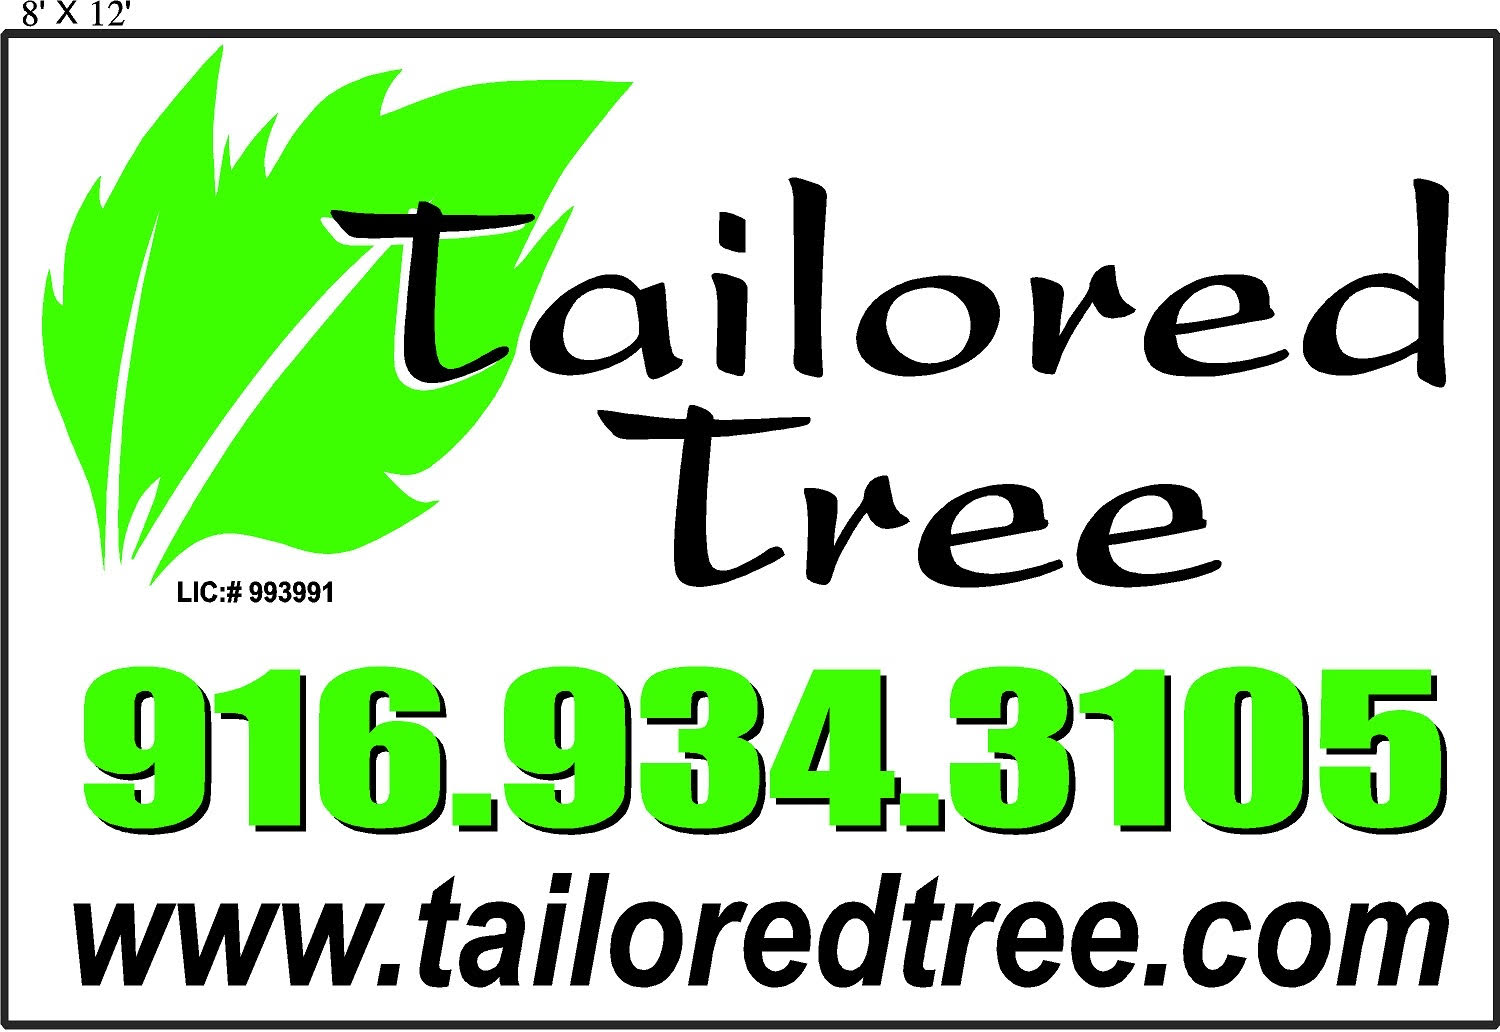 tailored tree